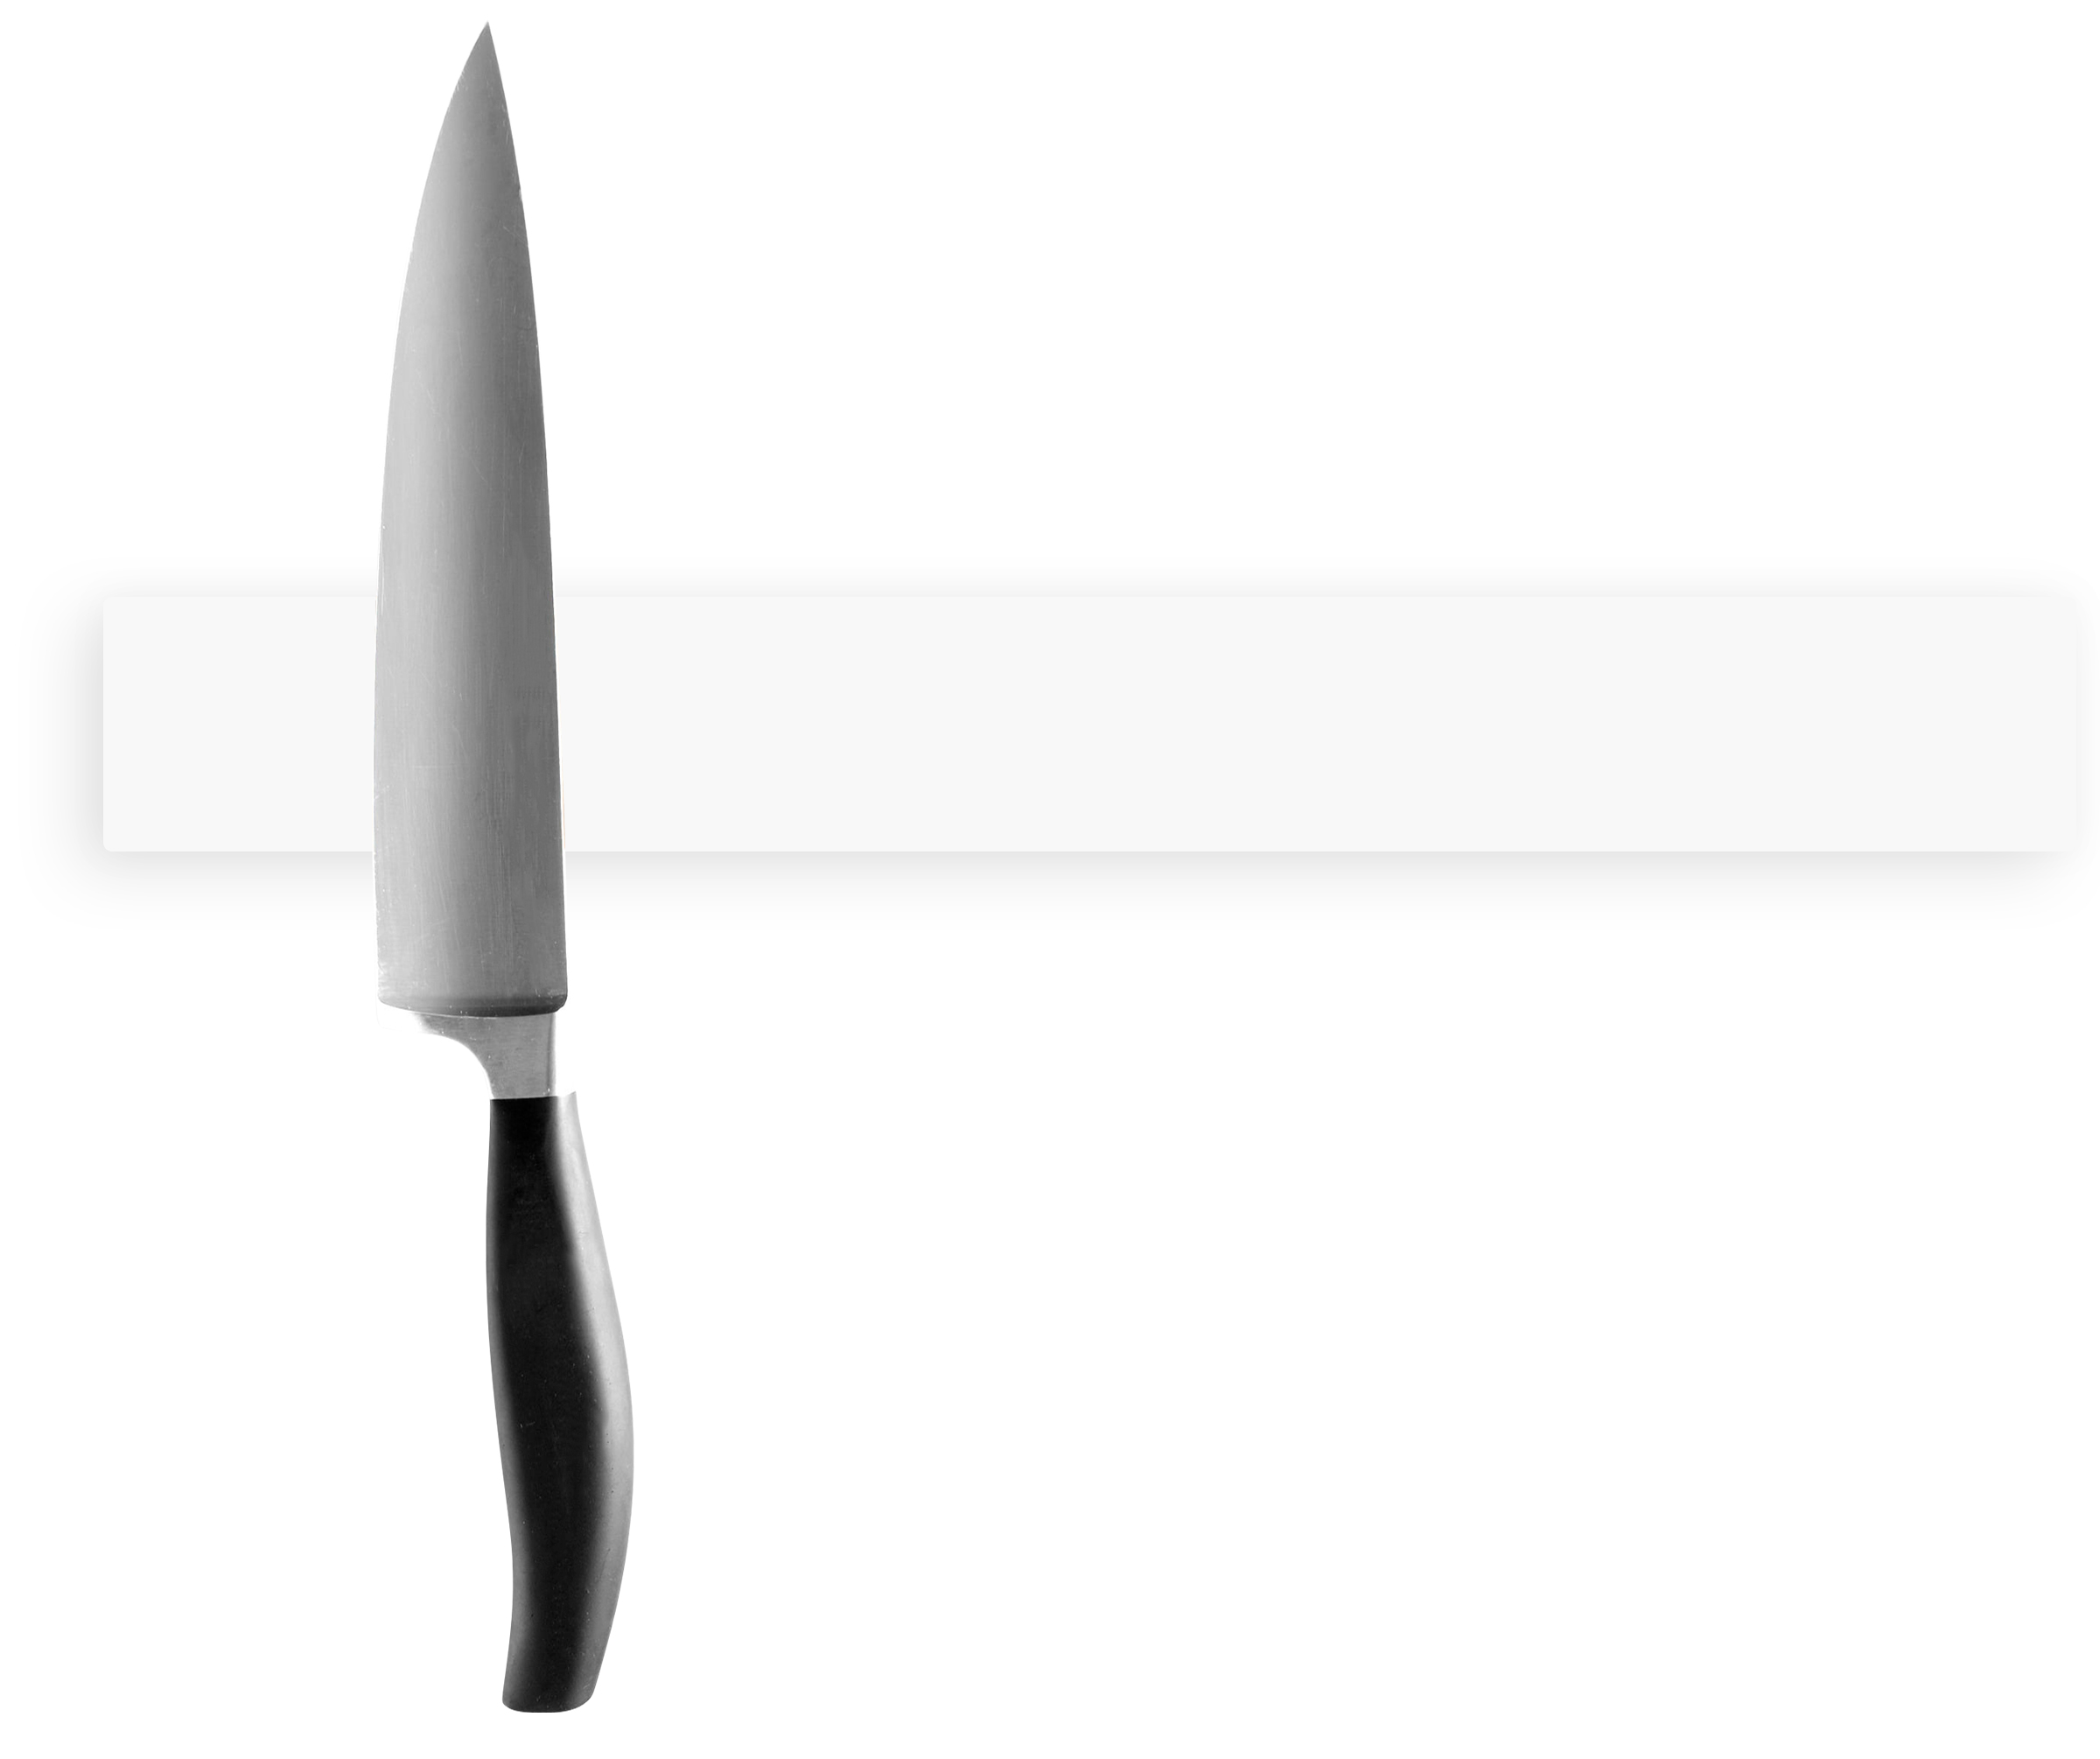 Køb Hvid knivmagnet i Corian